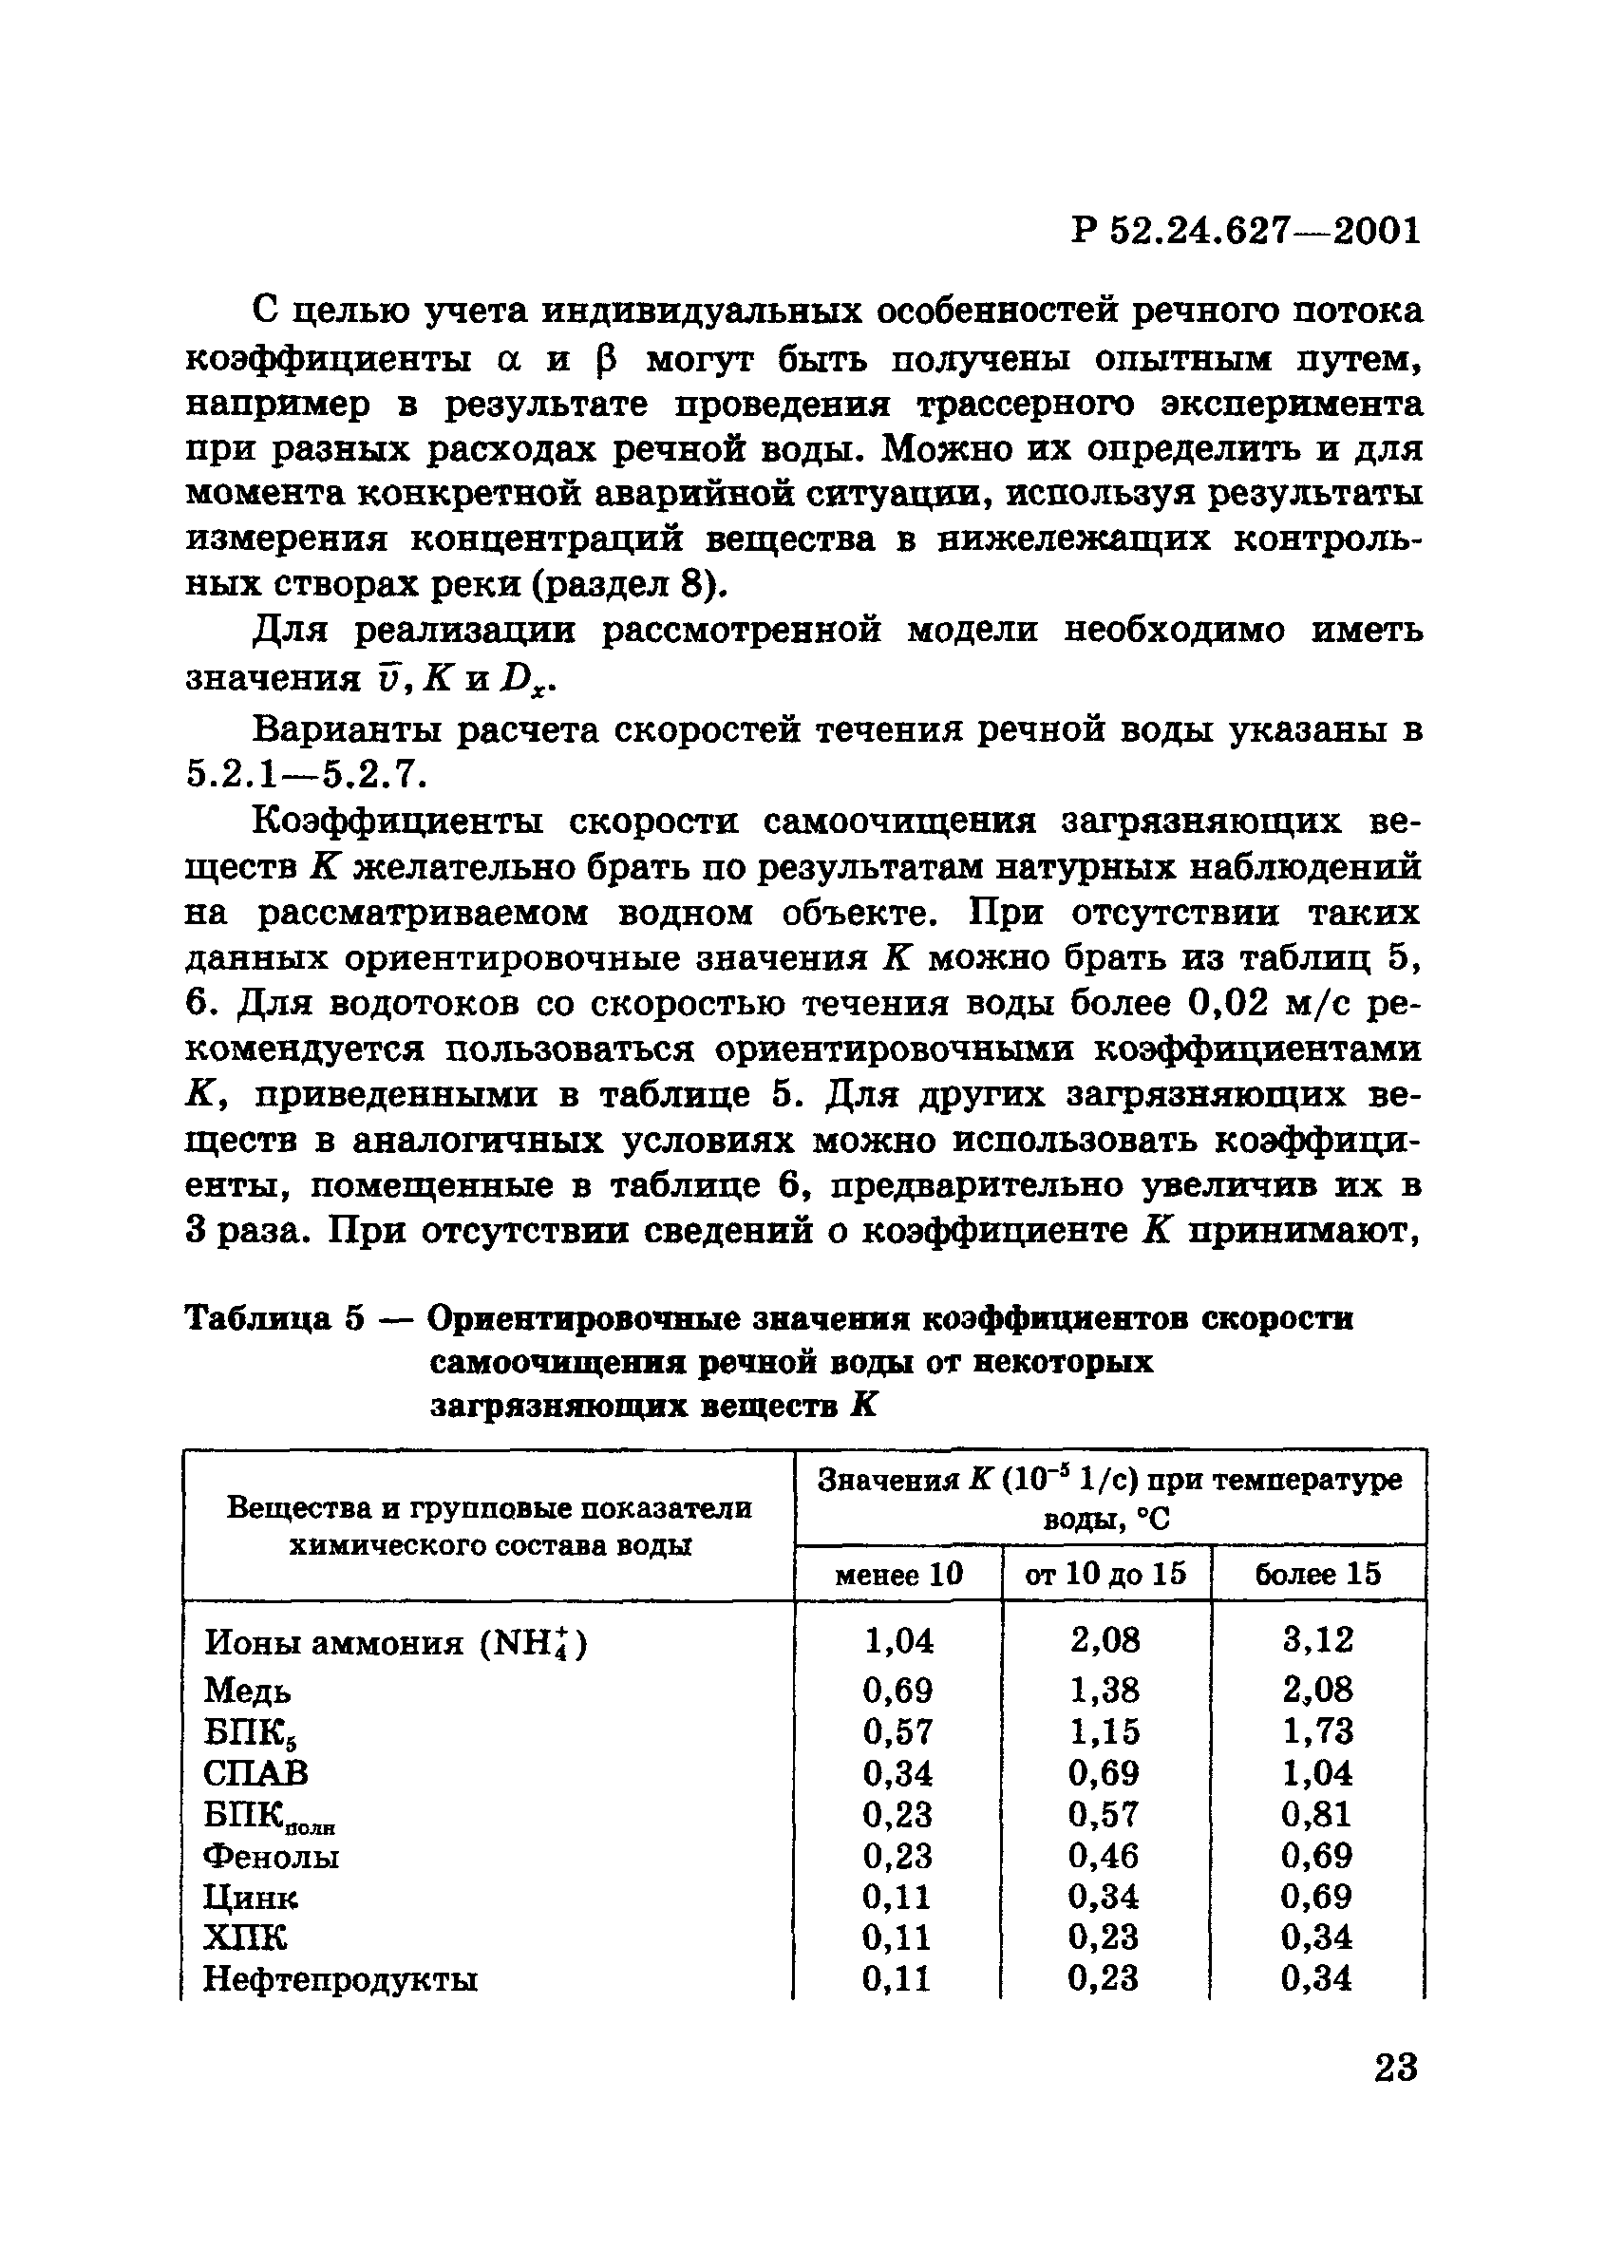 Р 52.24.627-2001